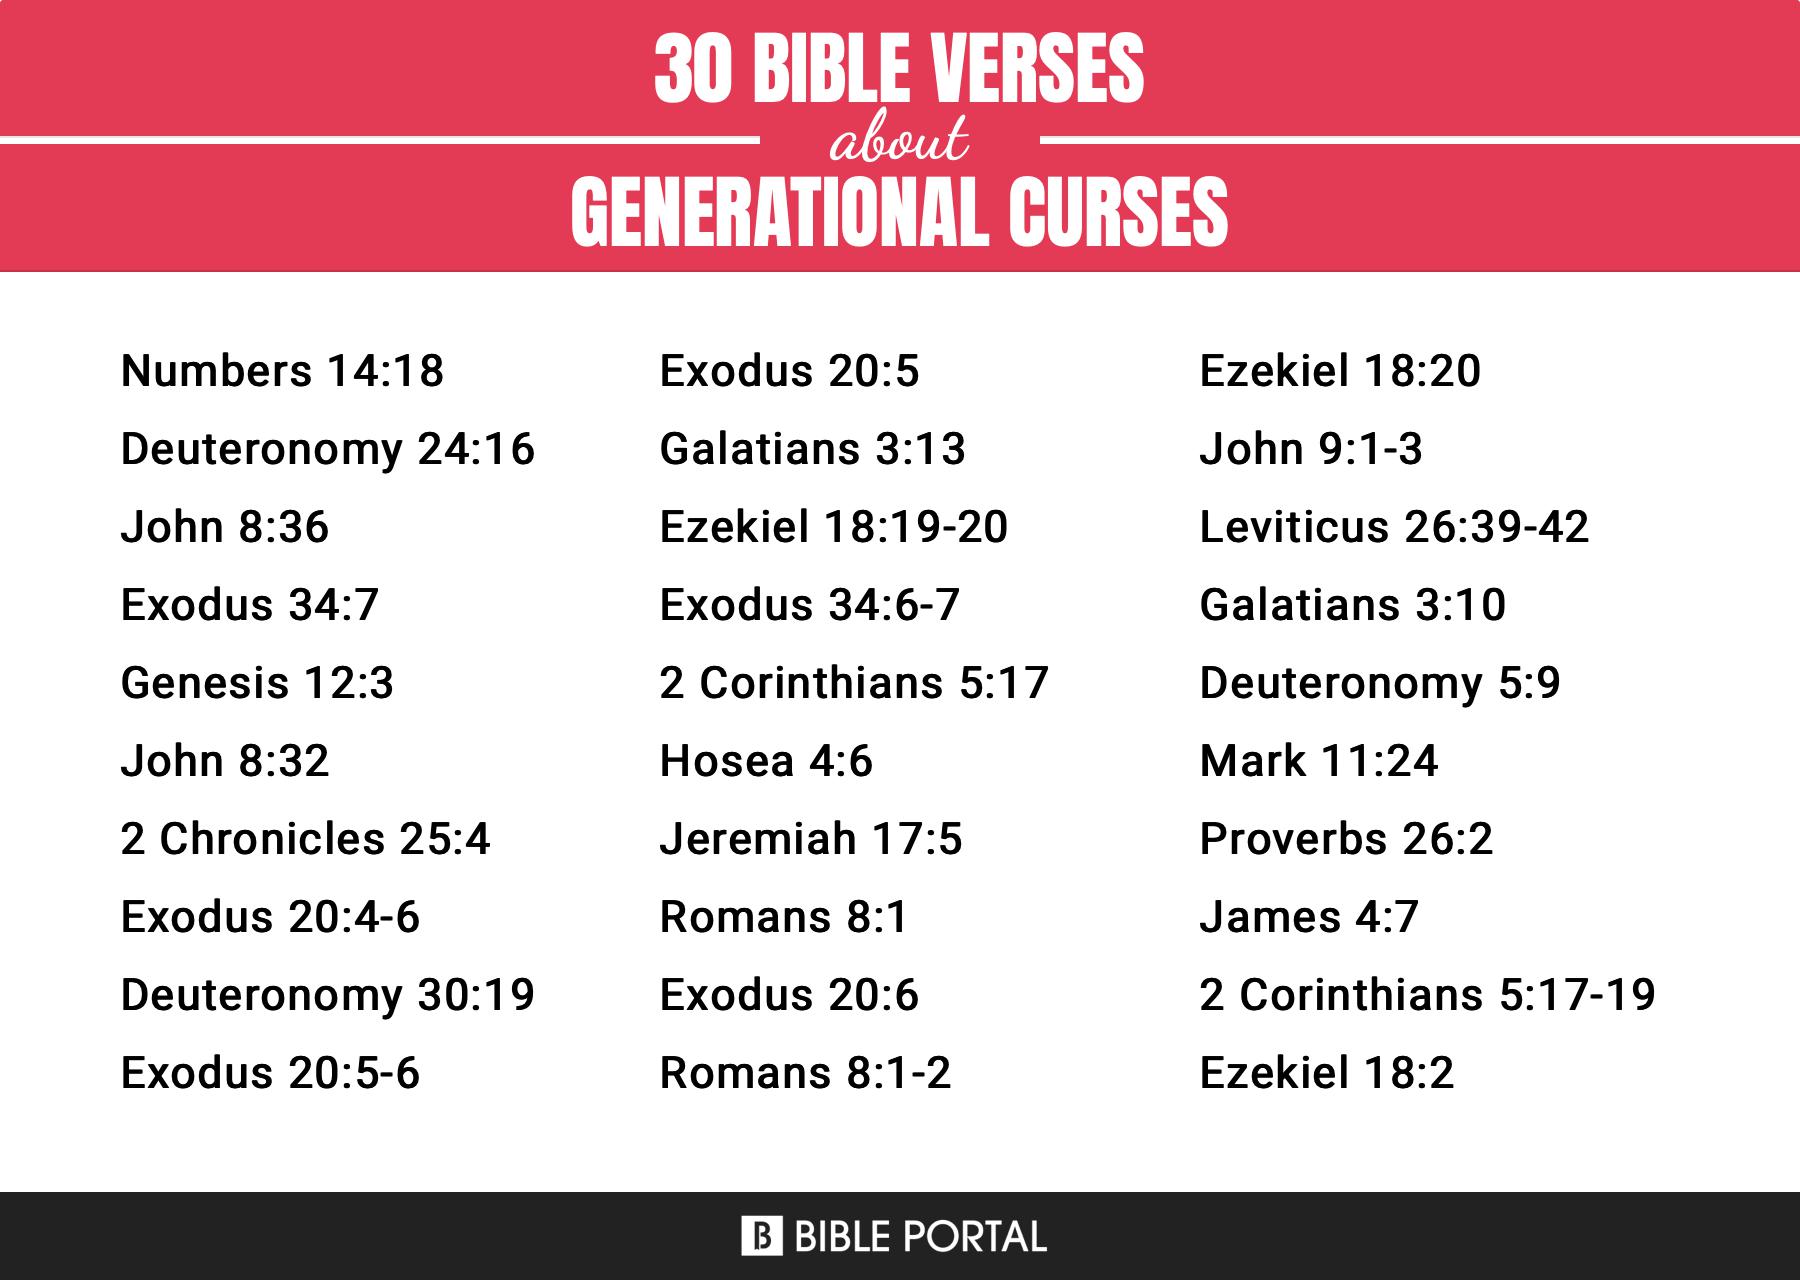 106 Bible about Curses?